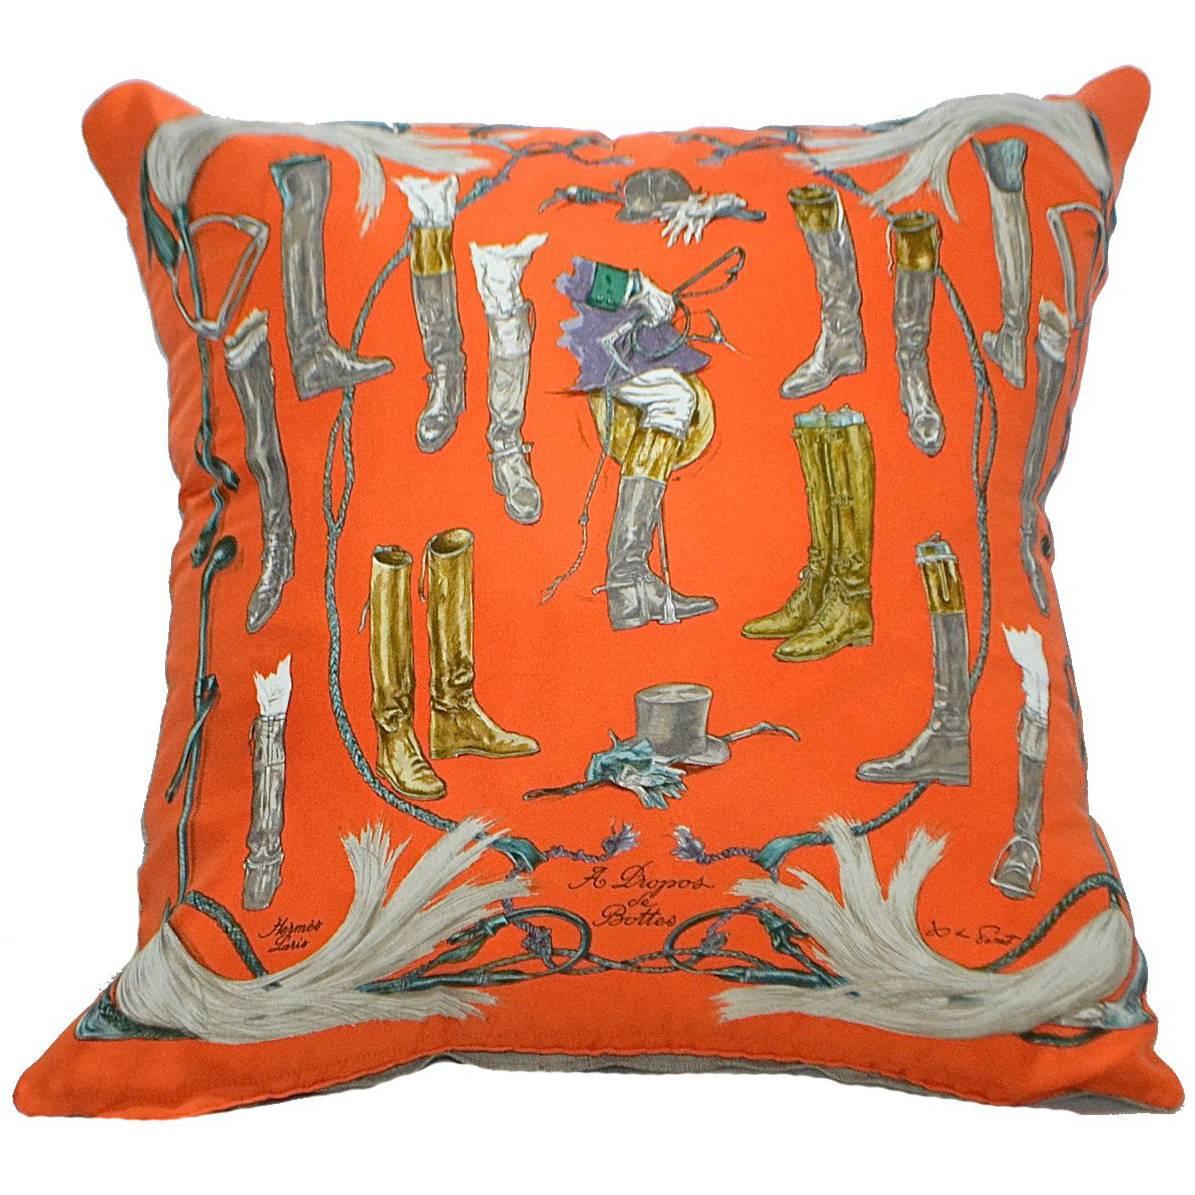 New Hermes Silk And Linen Medium Pillow "A Propos de Bottes" iwj4483-1